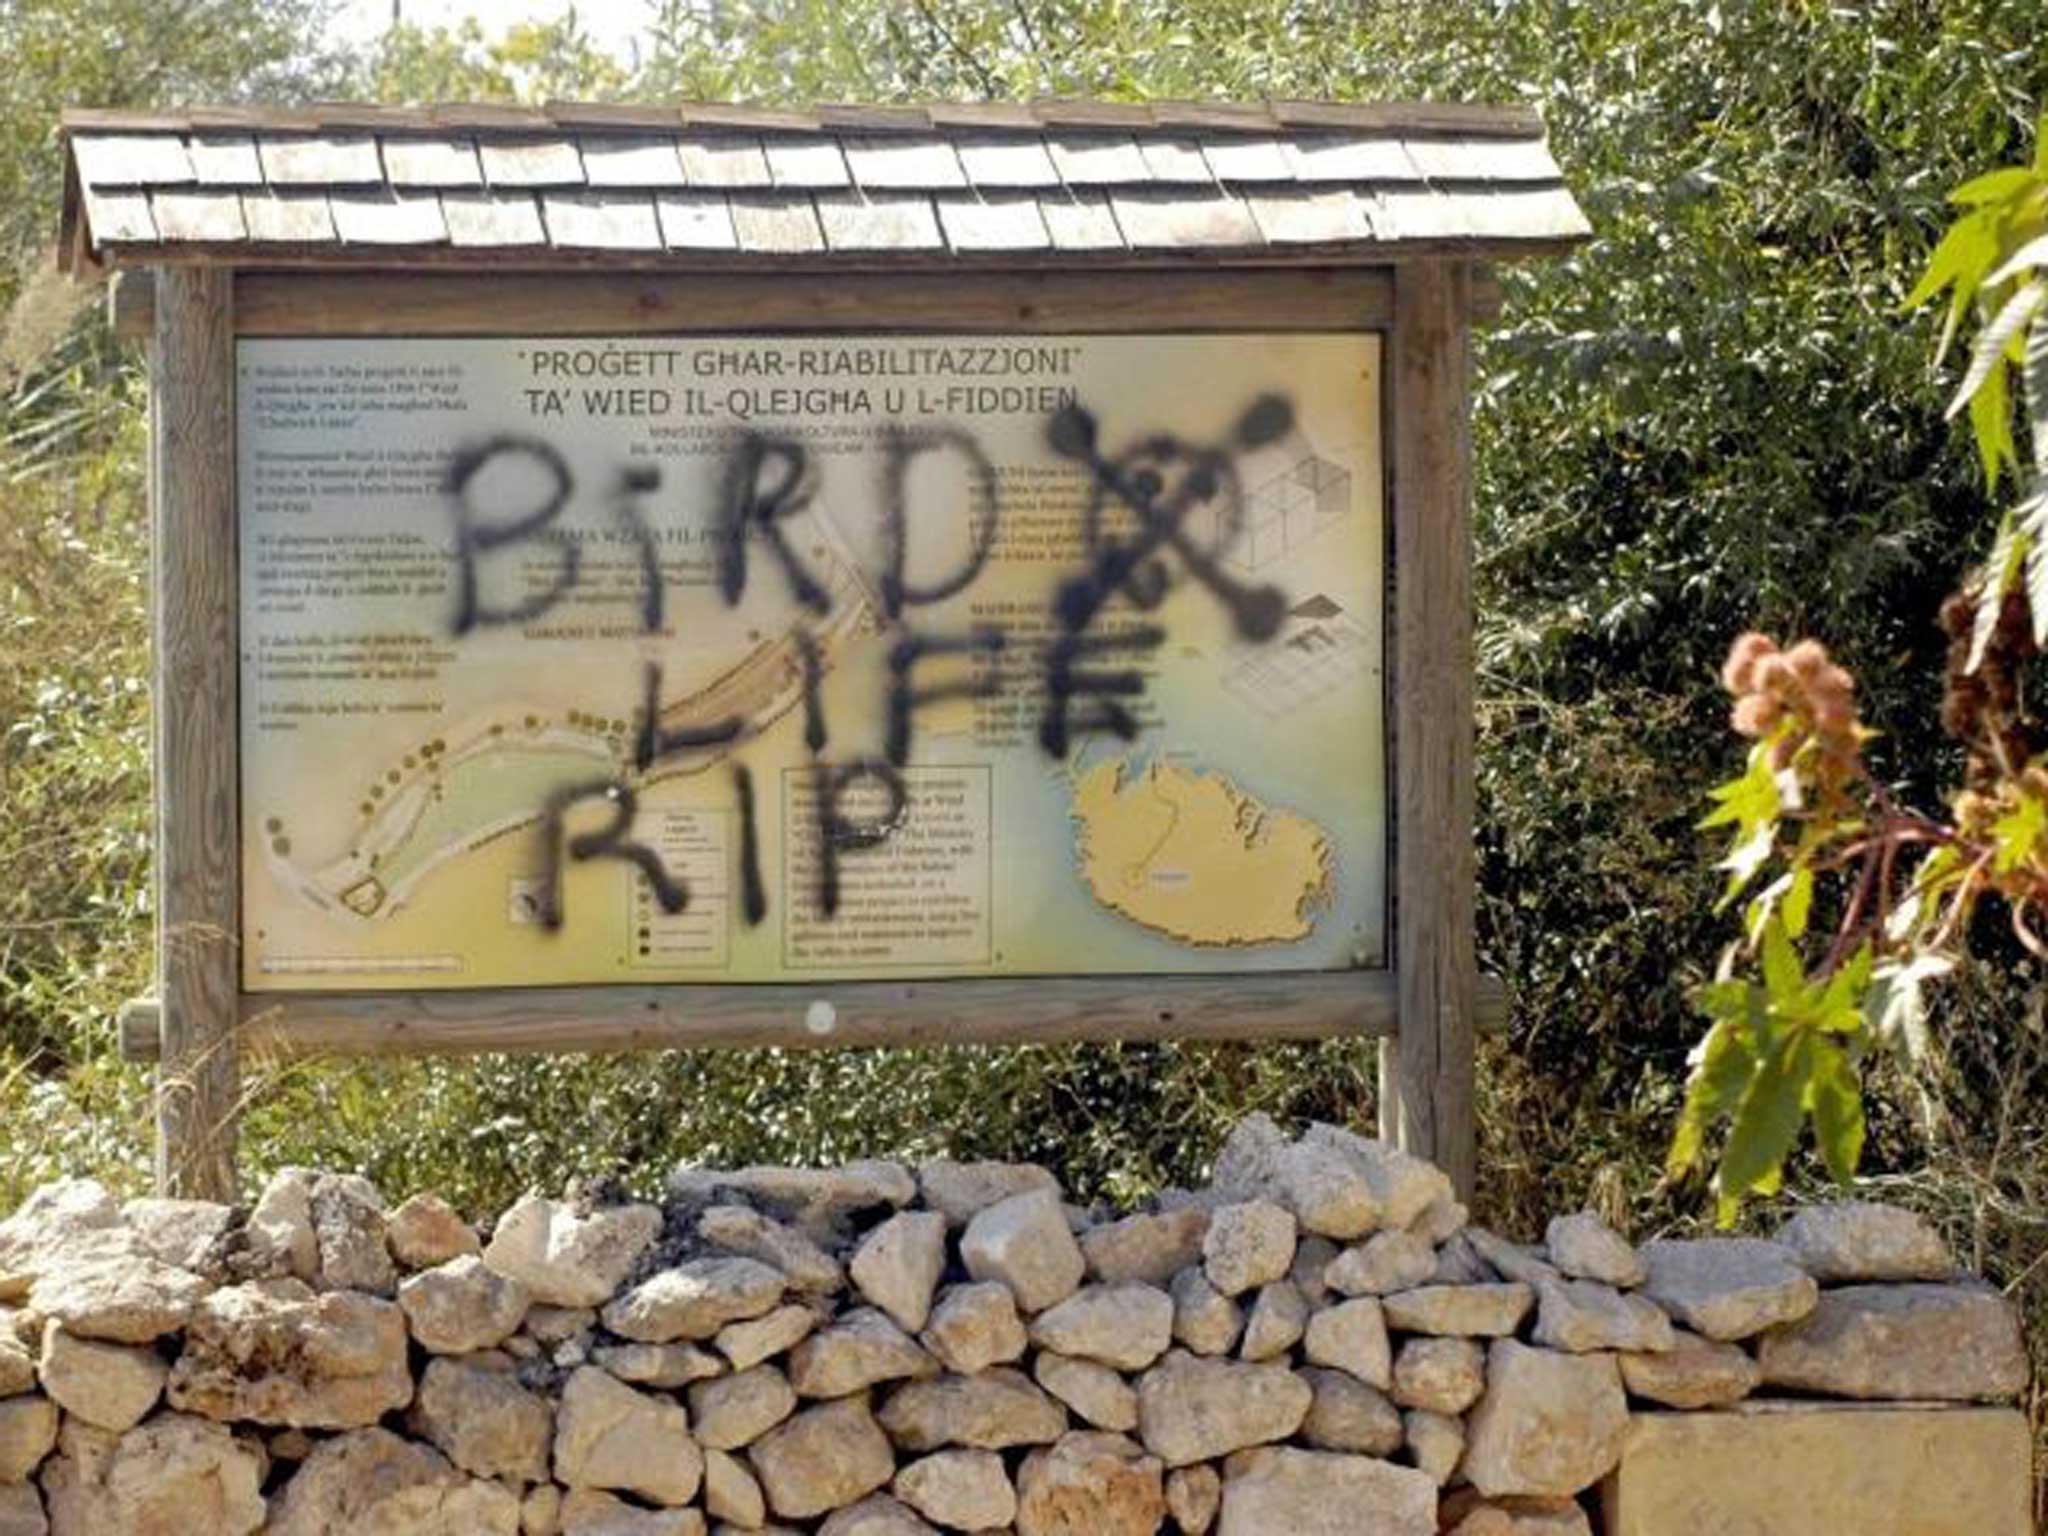 Birds and their protectors, Birdlife Malta, are regular targets on Malta